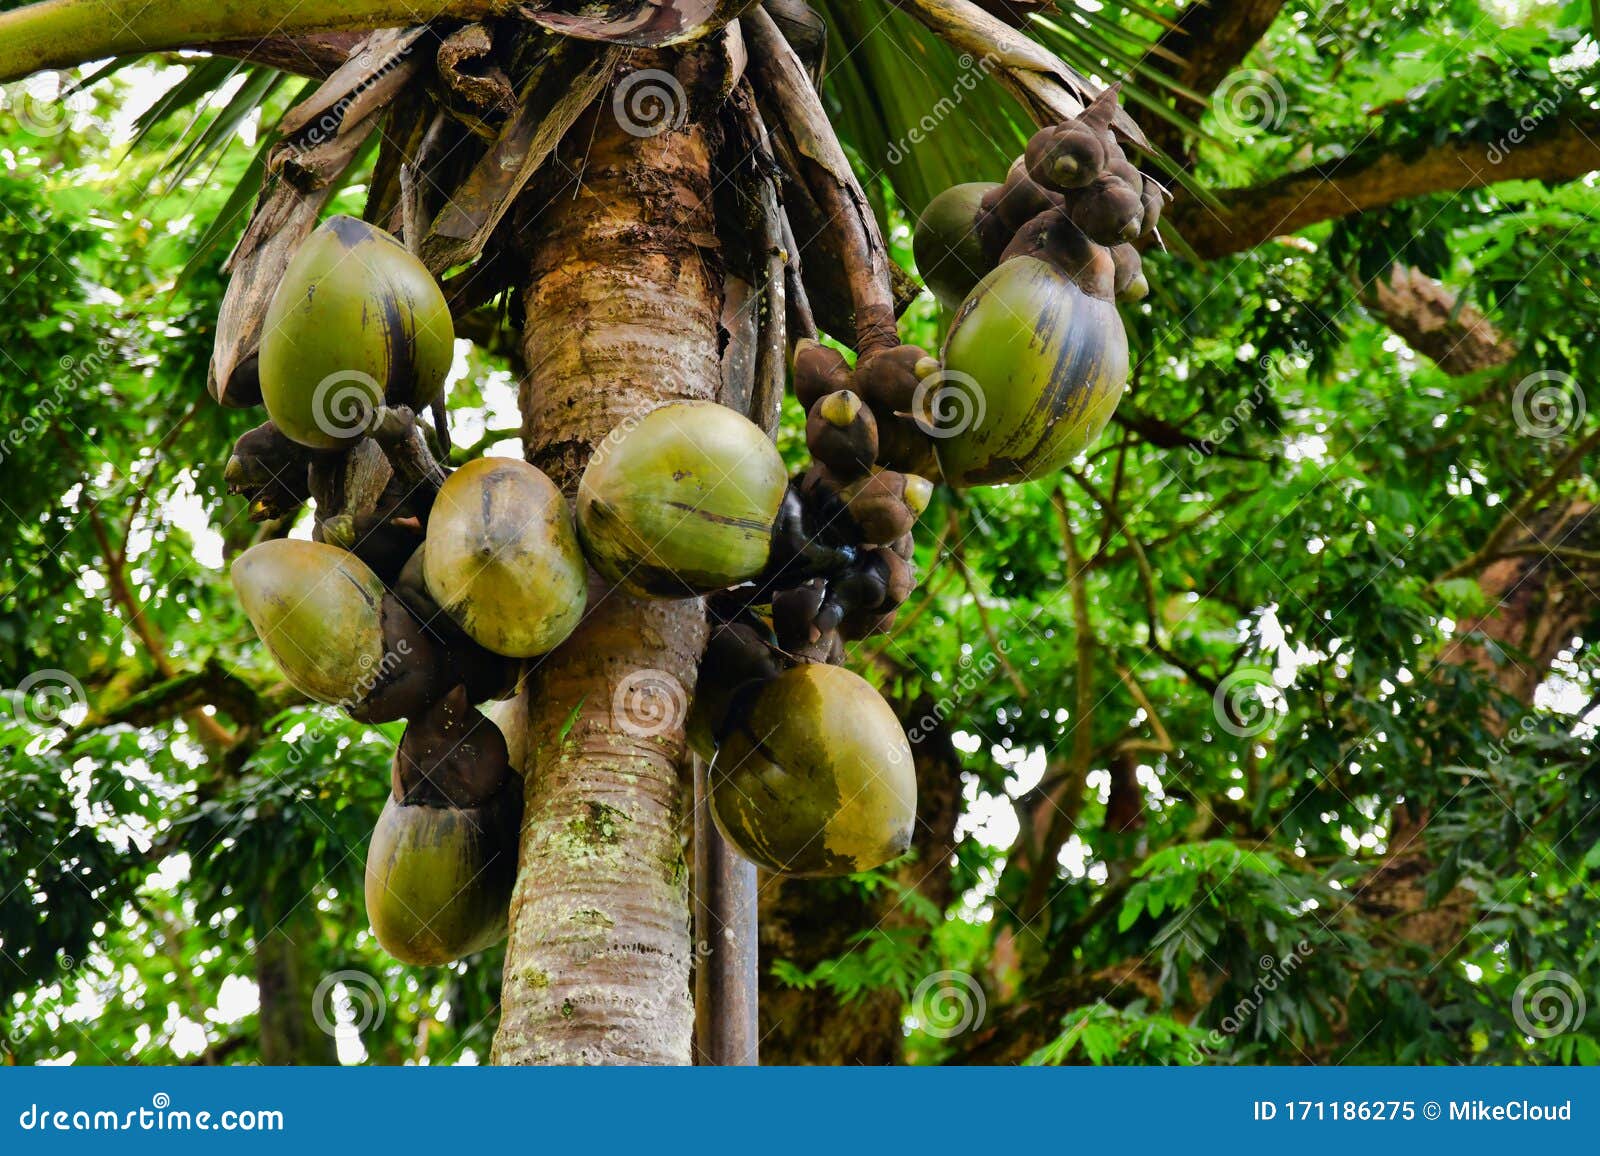 coco de mer palm tree seychelles